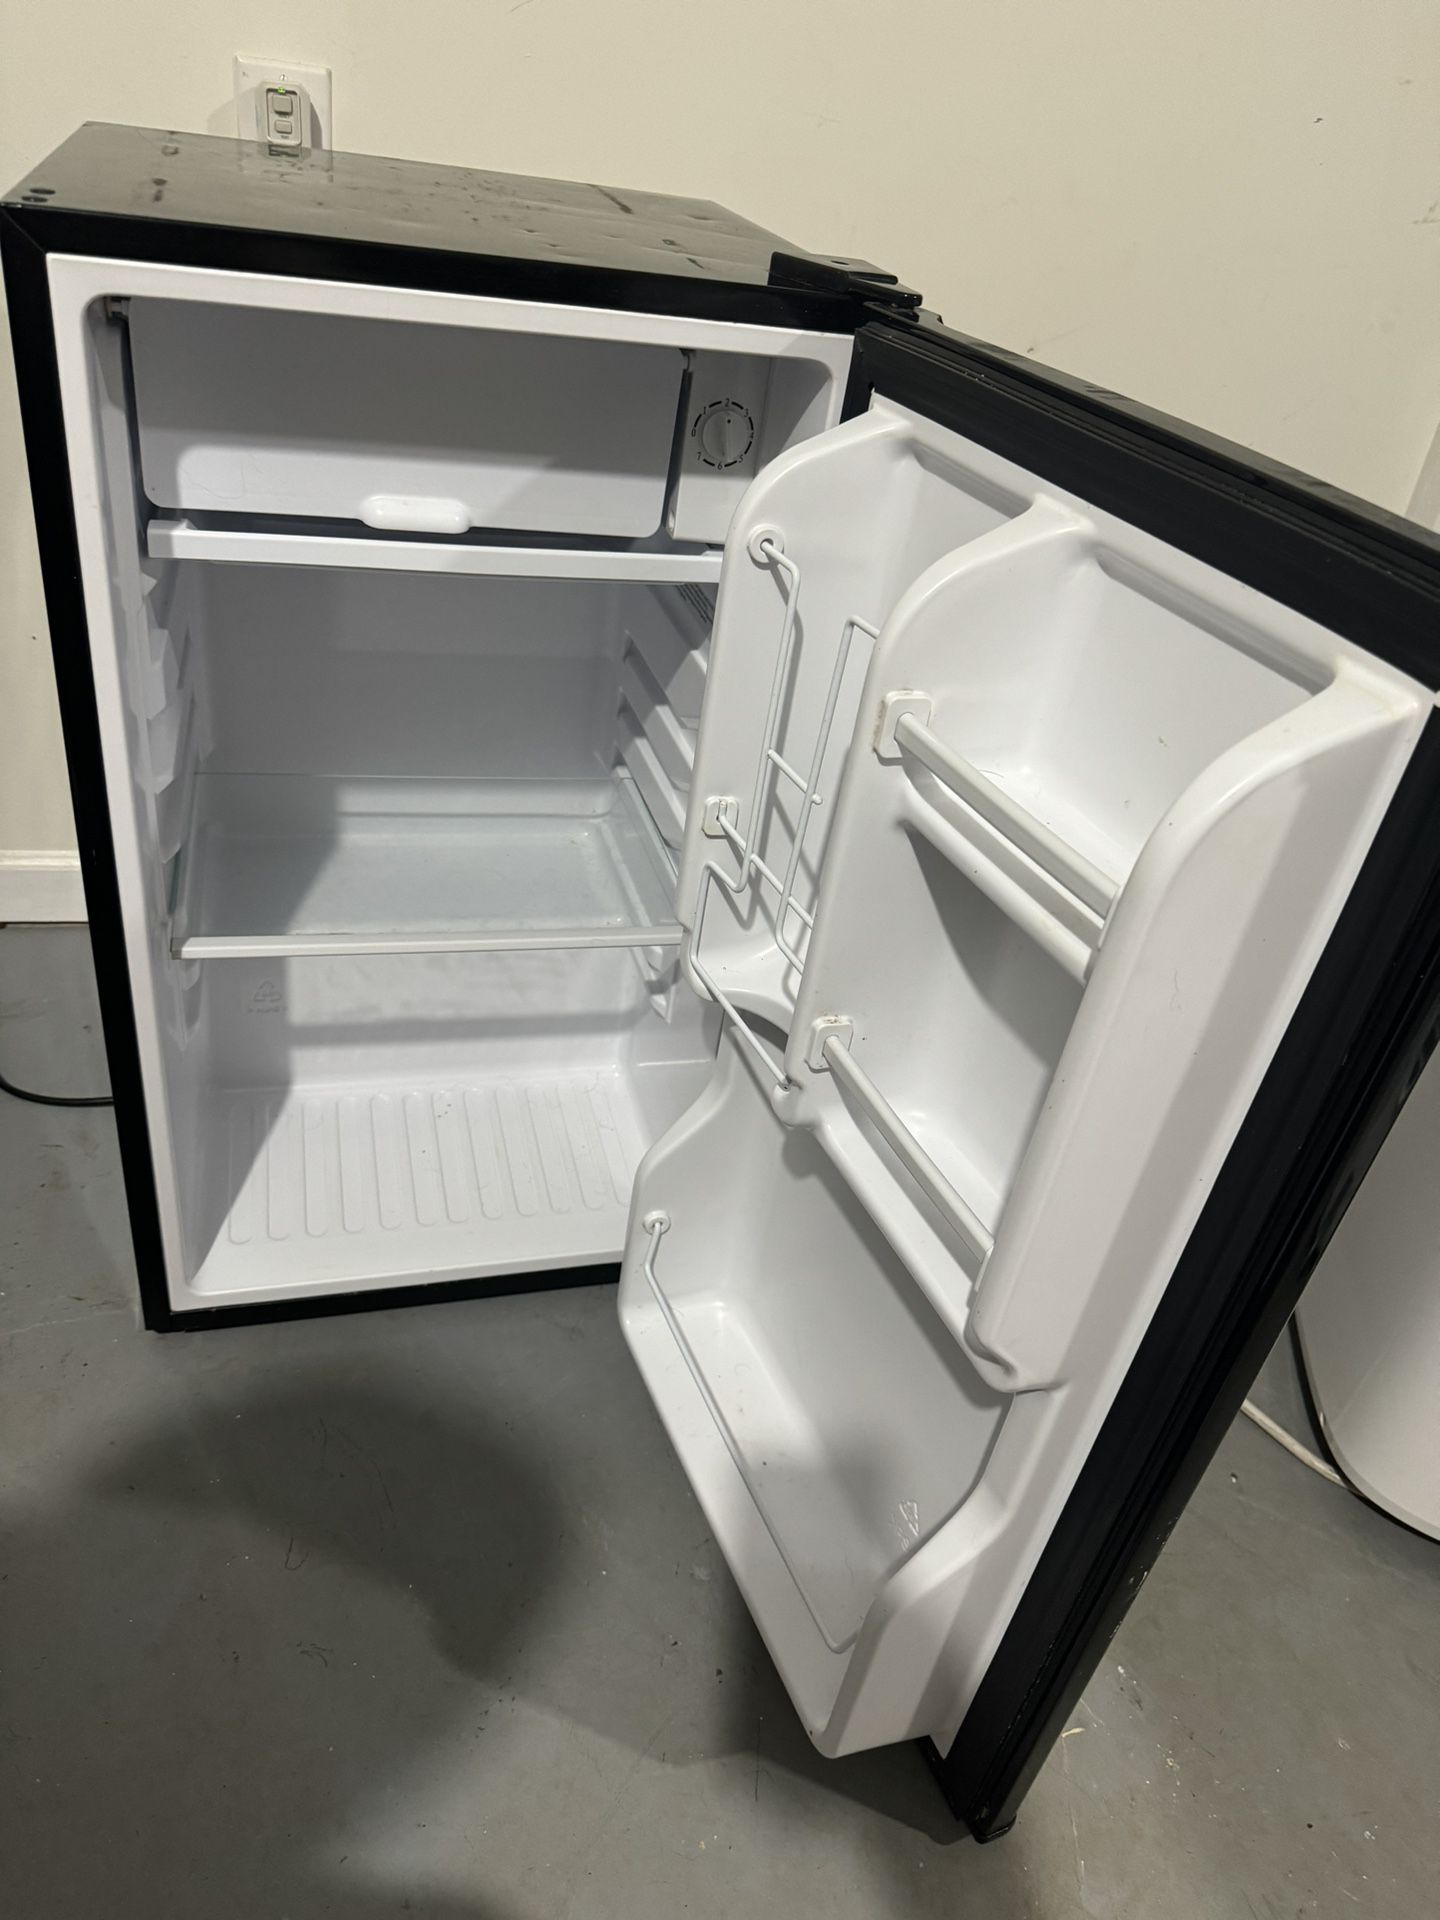 3.5 Cu. Ft. Compact Refrigerator